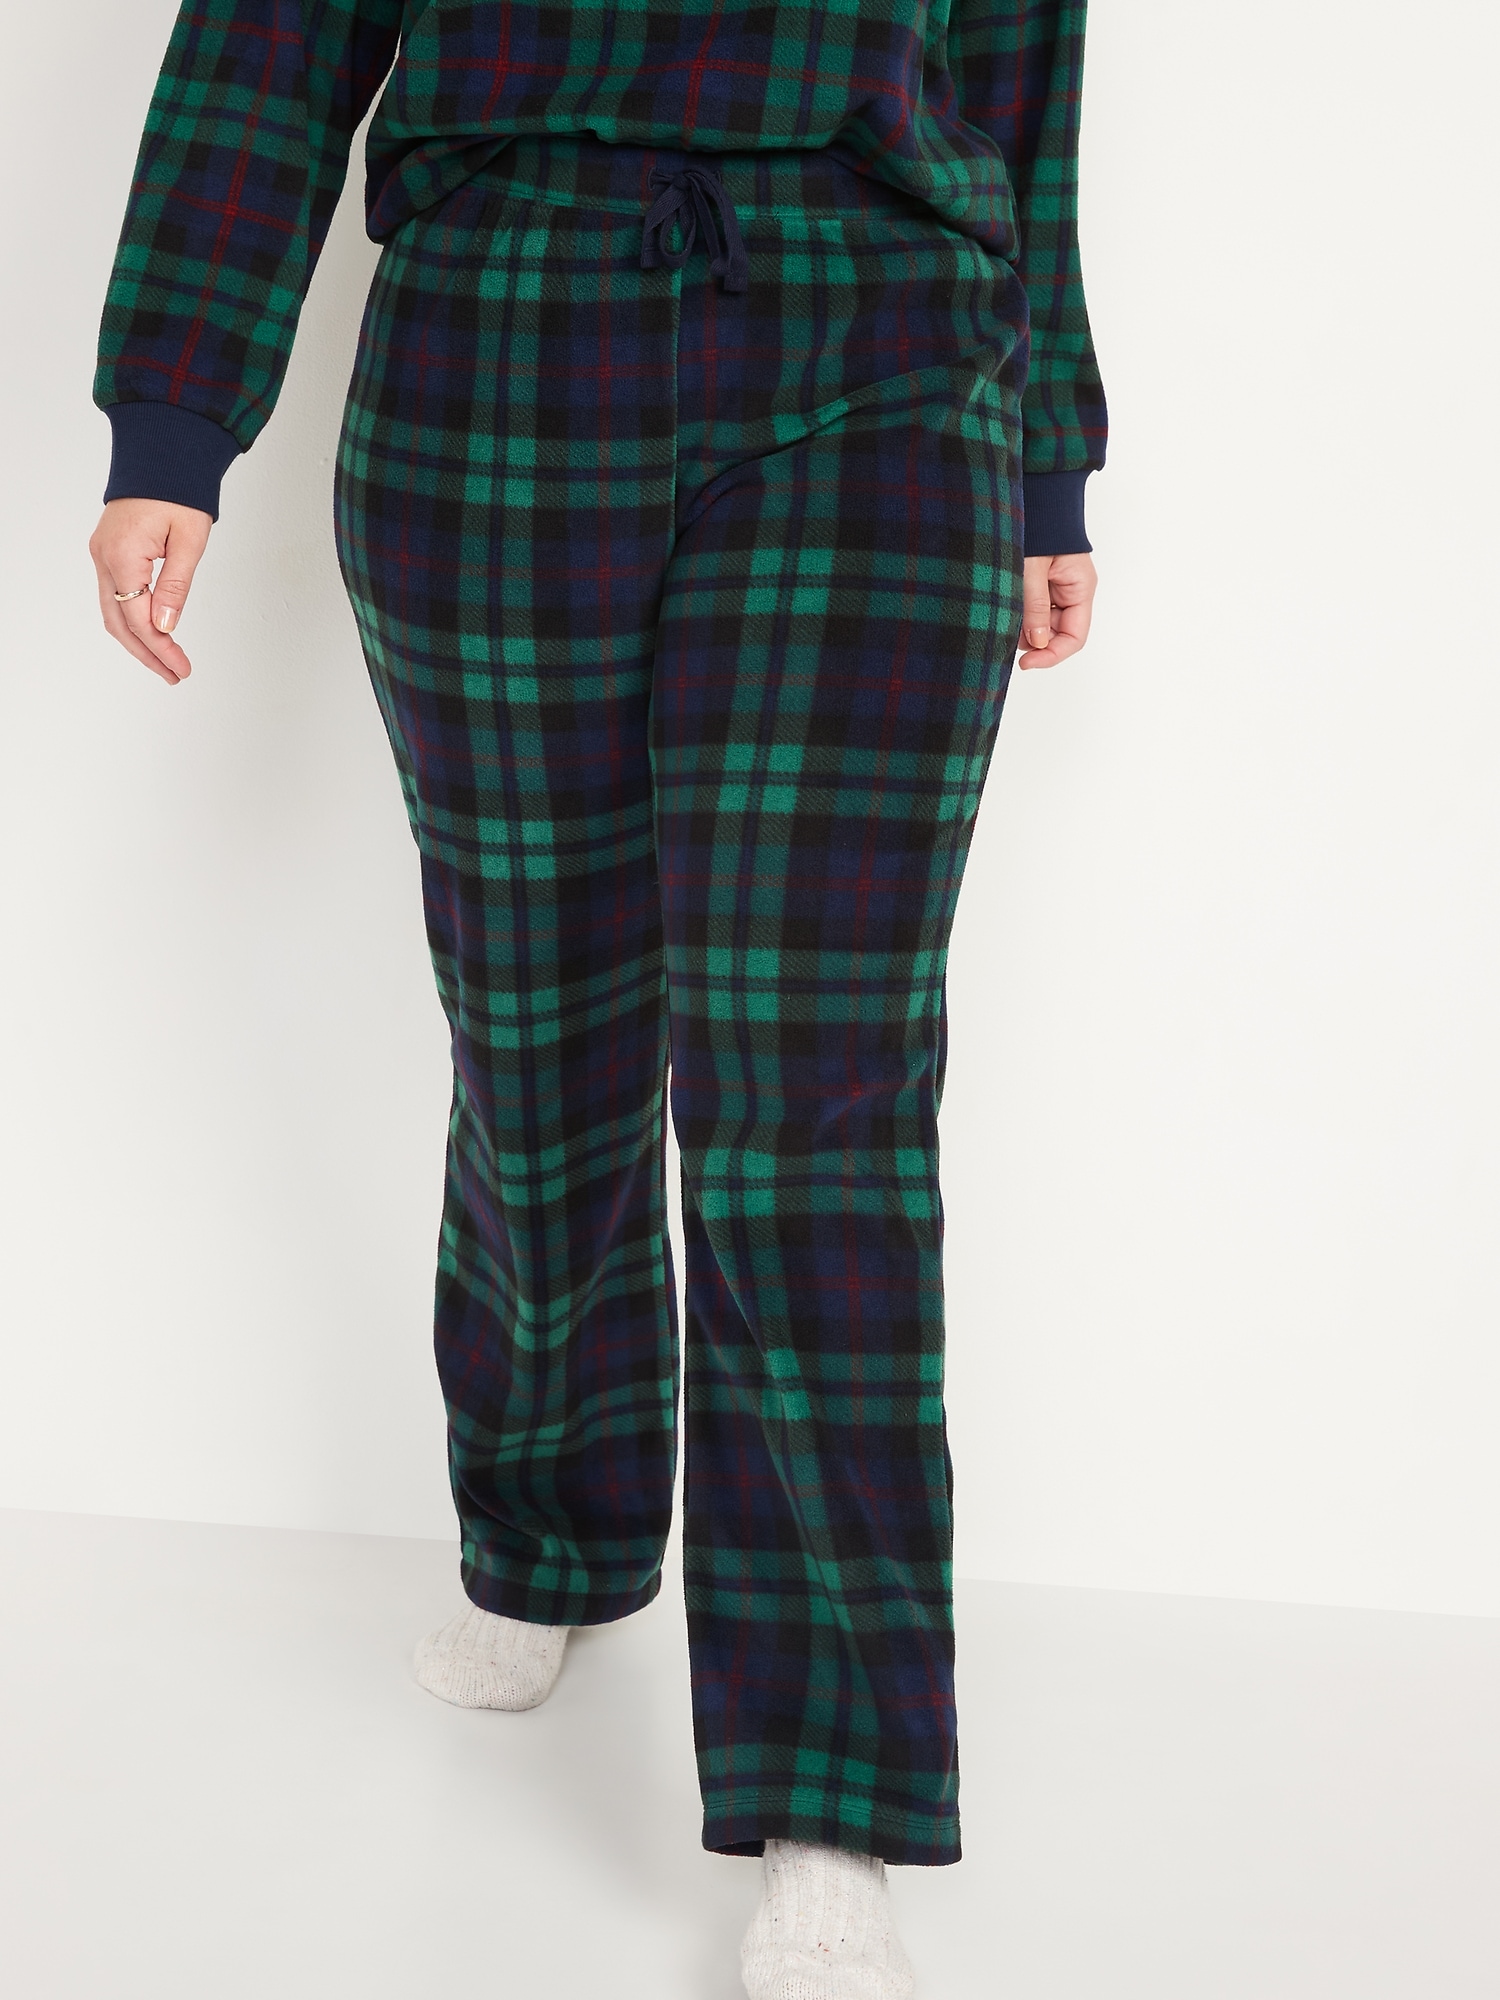 Matching Printed Microfleece Pajama Pants for Women